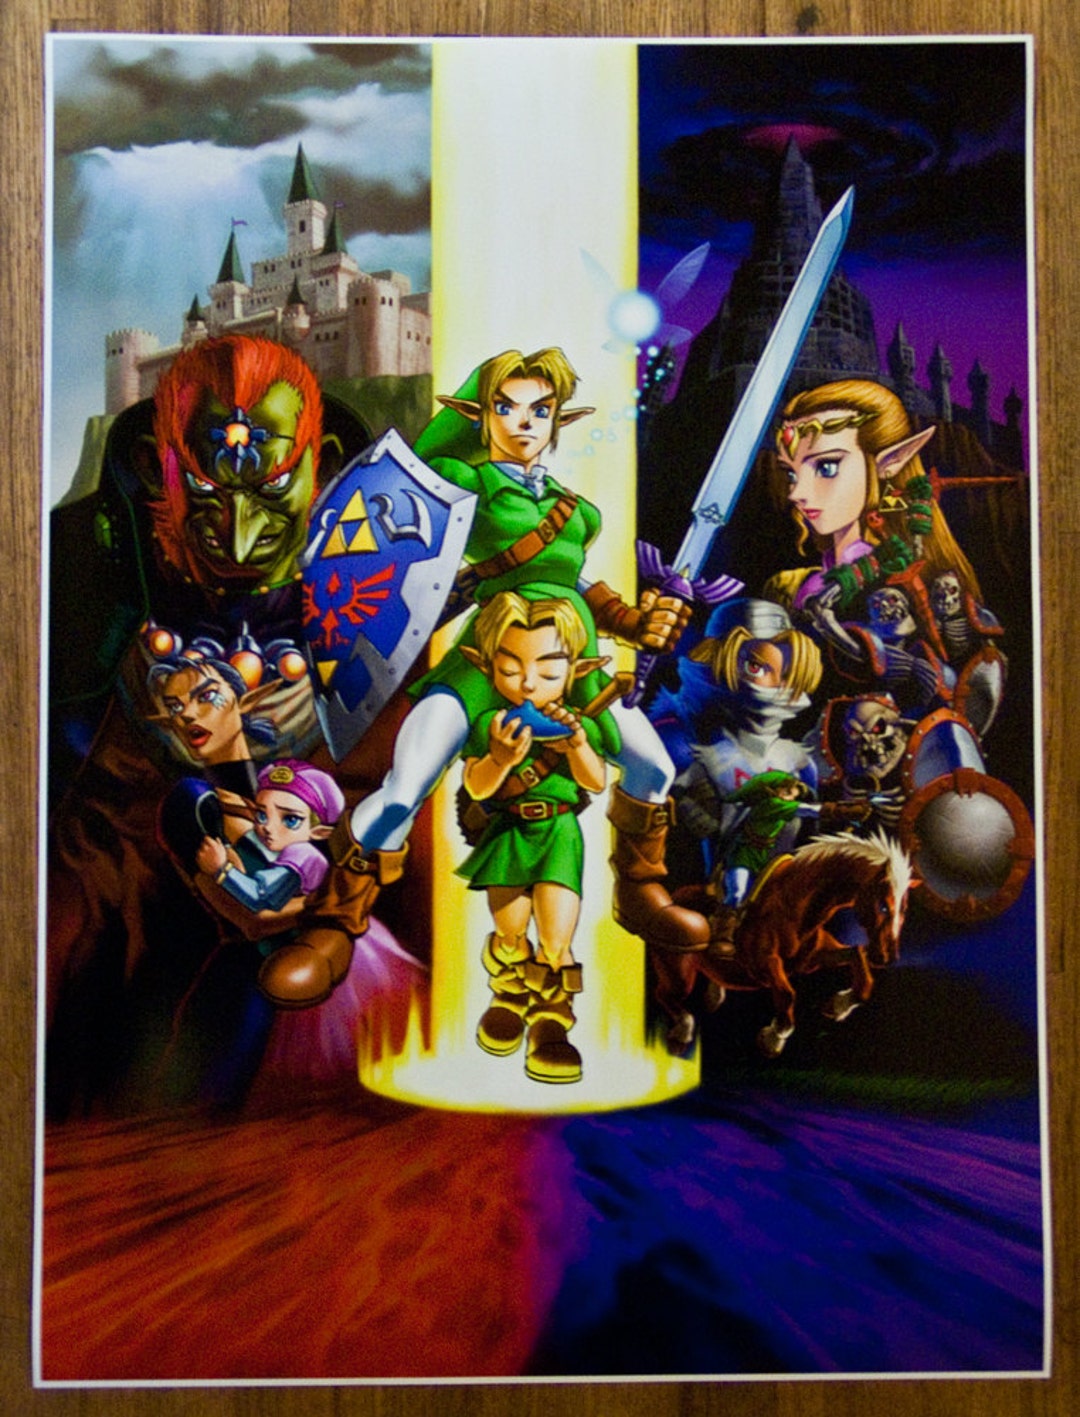 Zelda - Songs of the Ocarina Poster (24 x 36) 